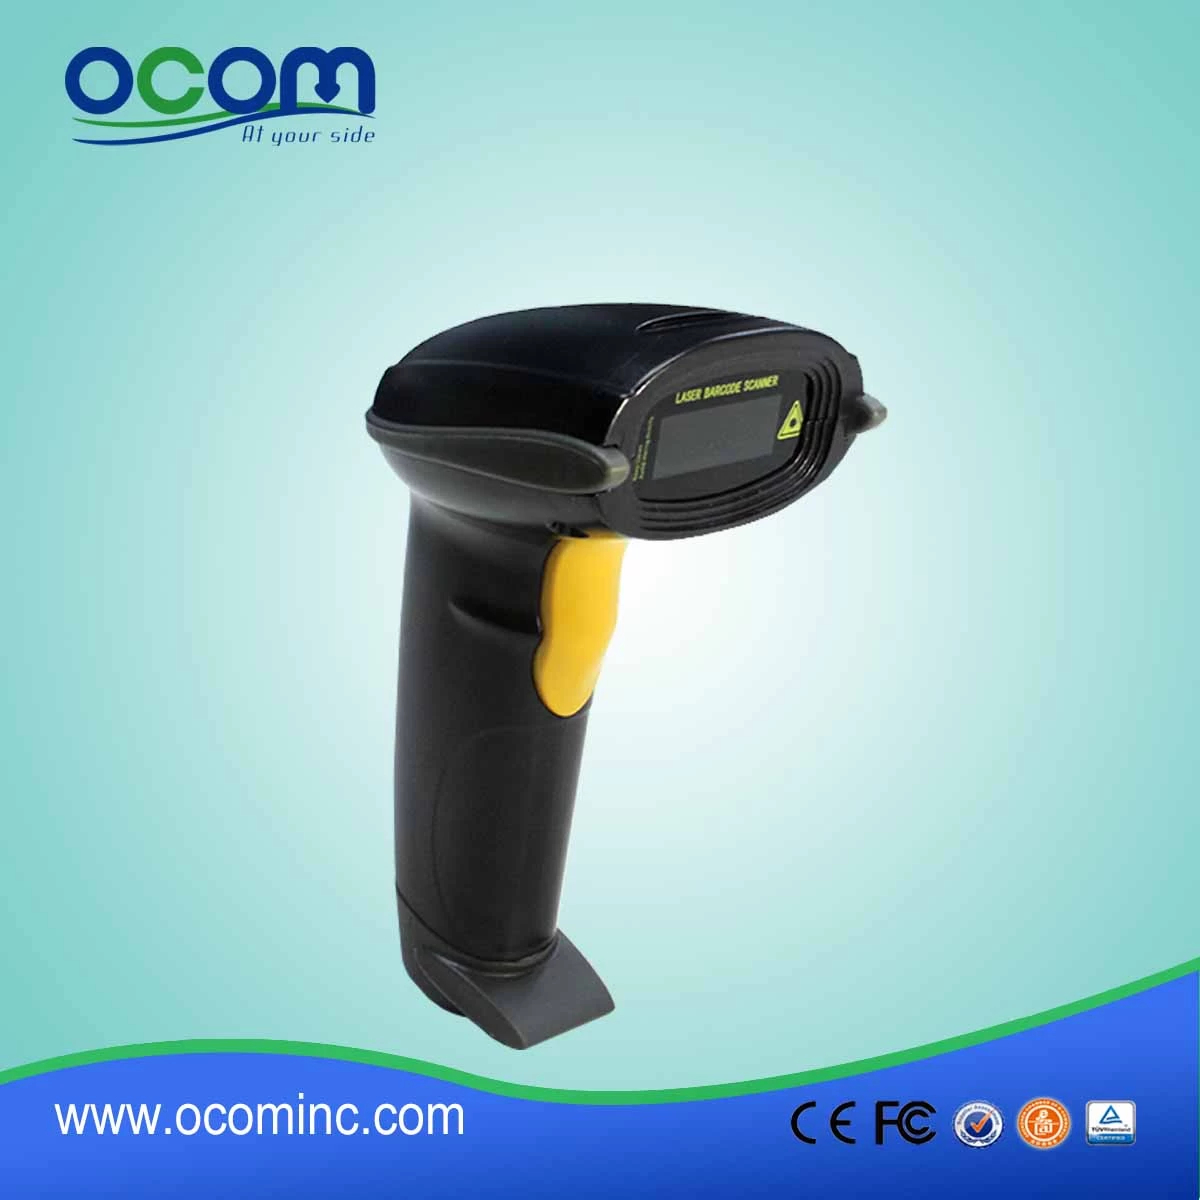 OCBS-W011 Wireless Handy Mini Barcode Bluetooth Scanner